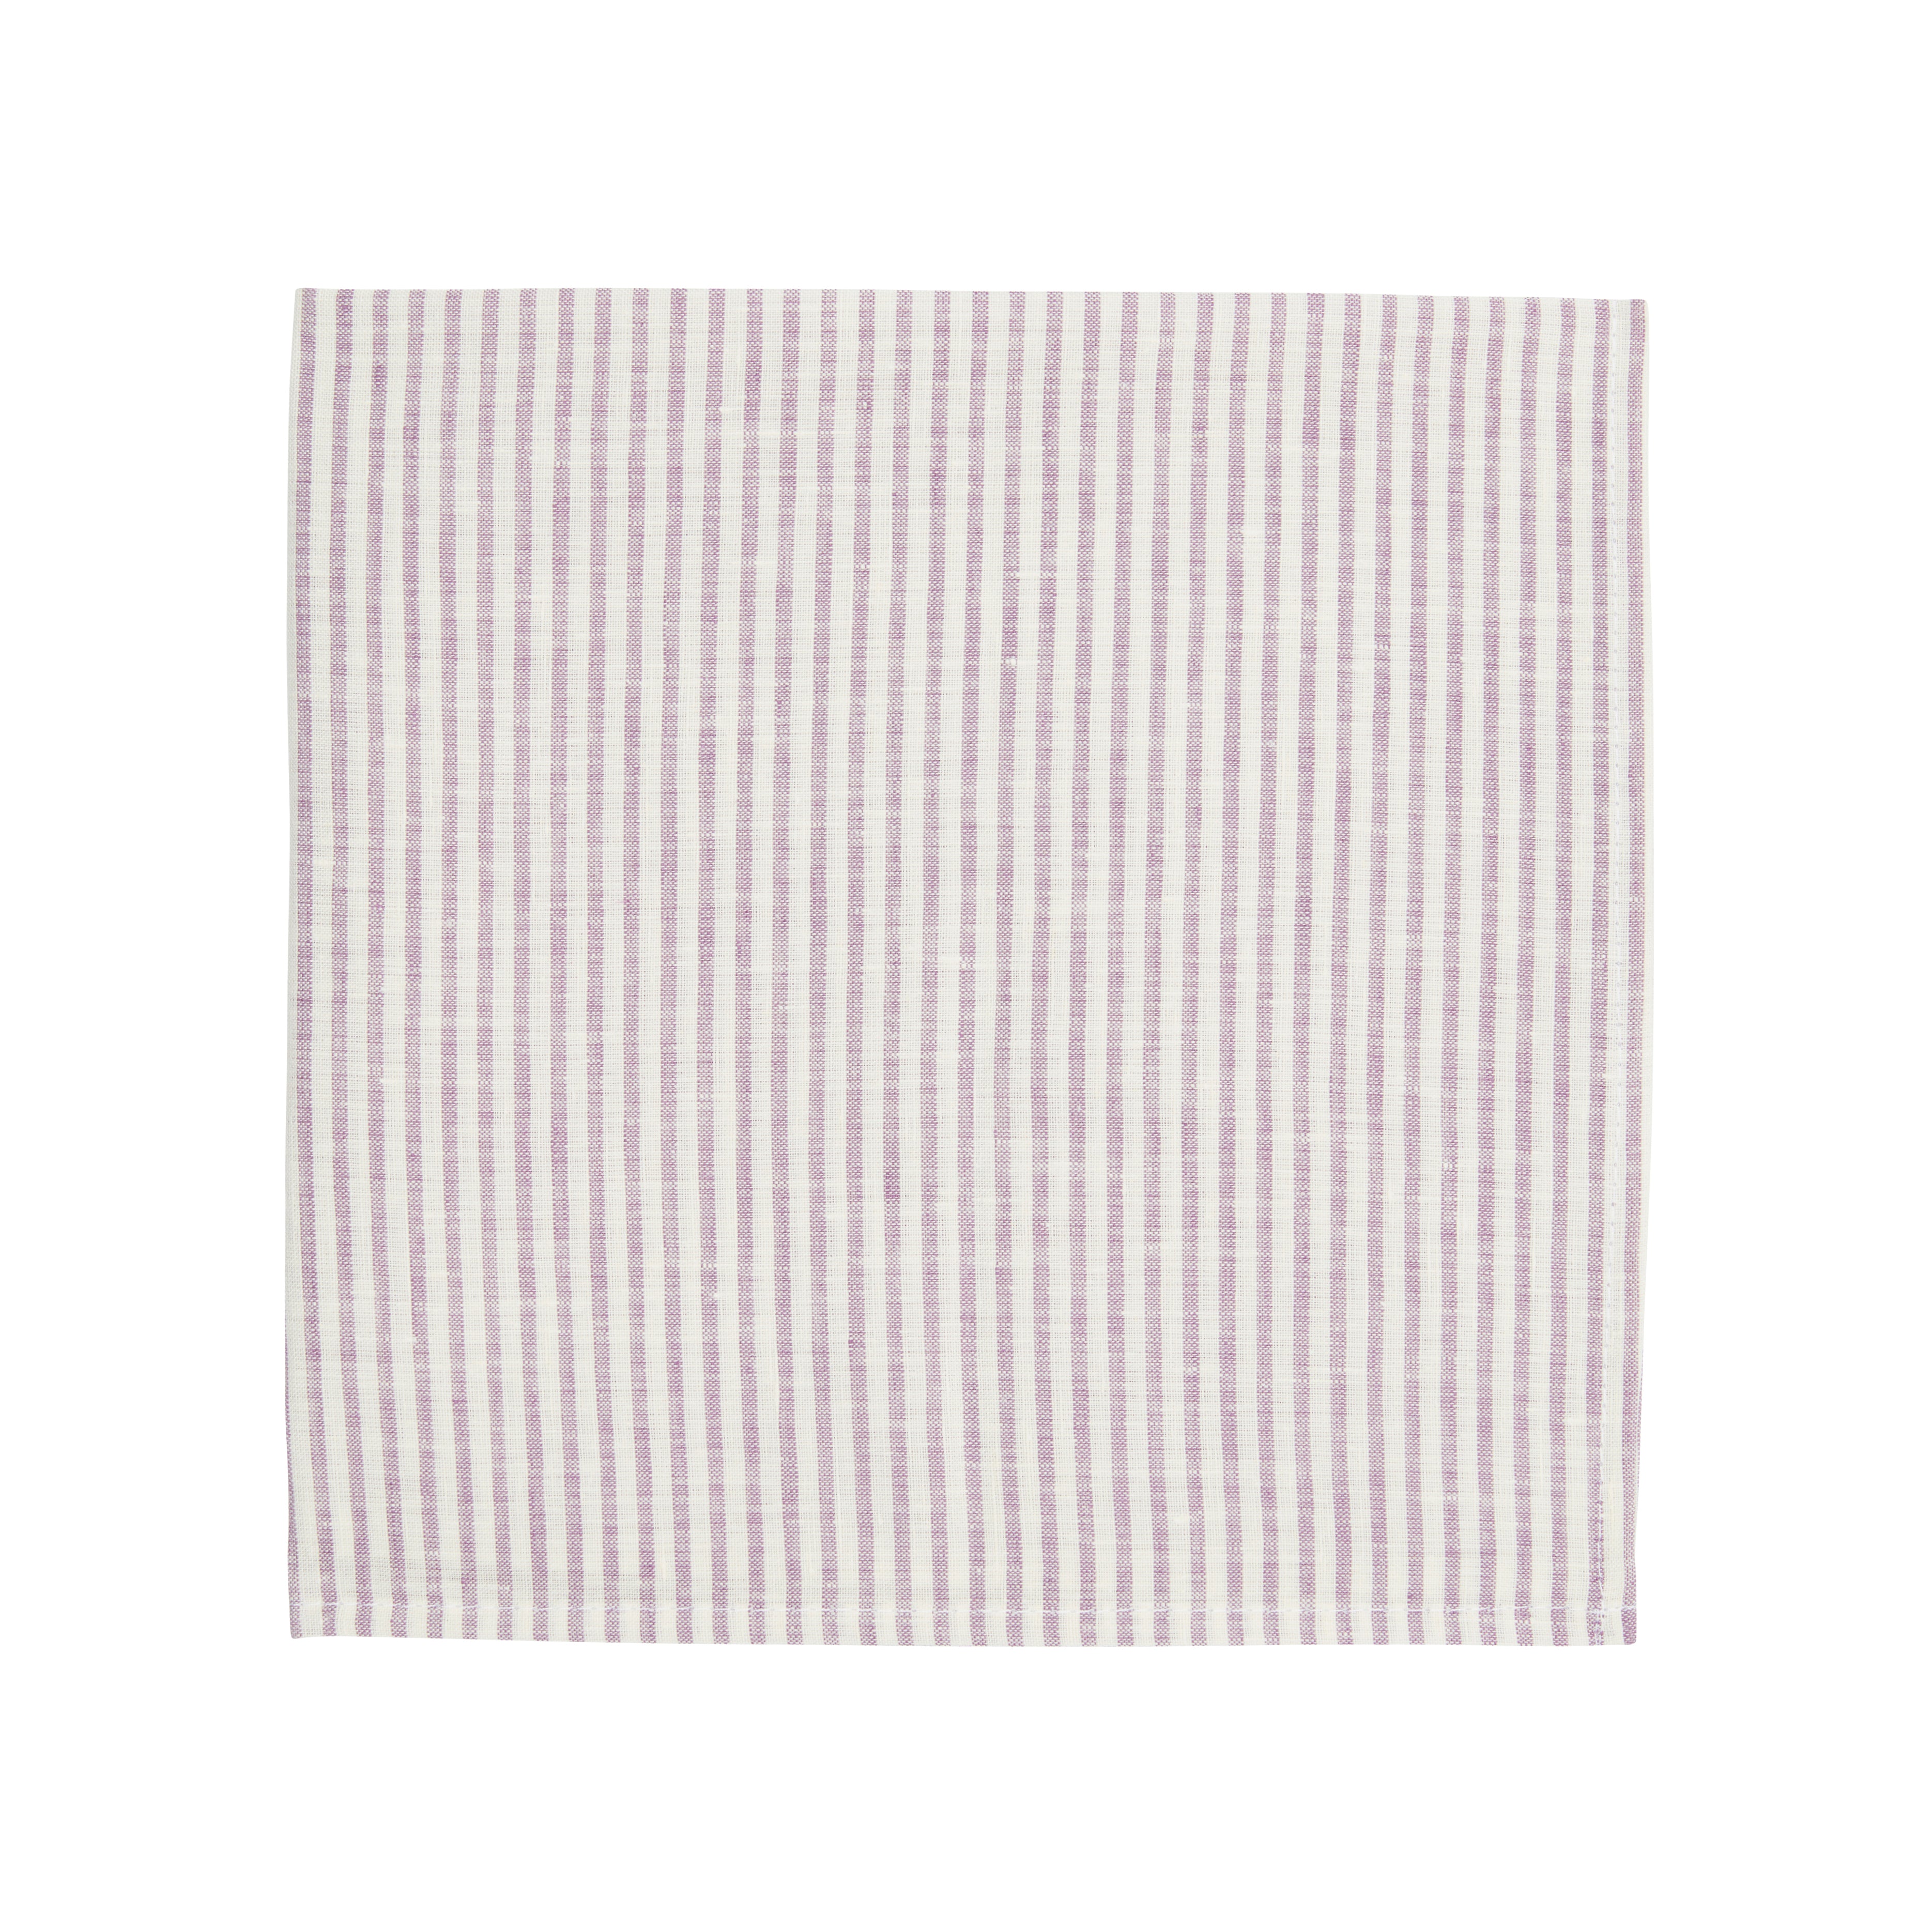 Napkin Stripe 54cm x 54cm - Amethyst and White